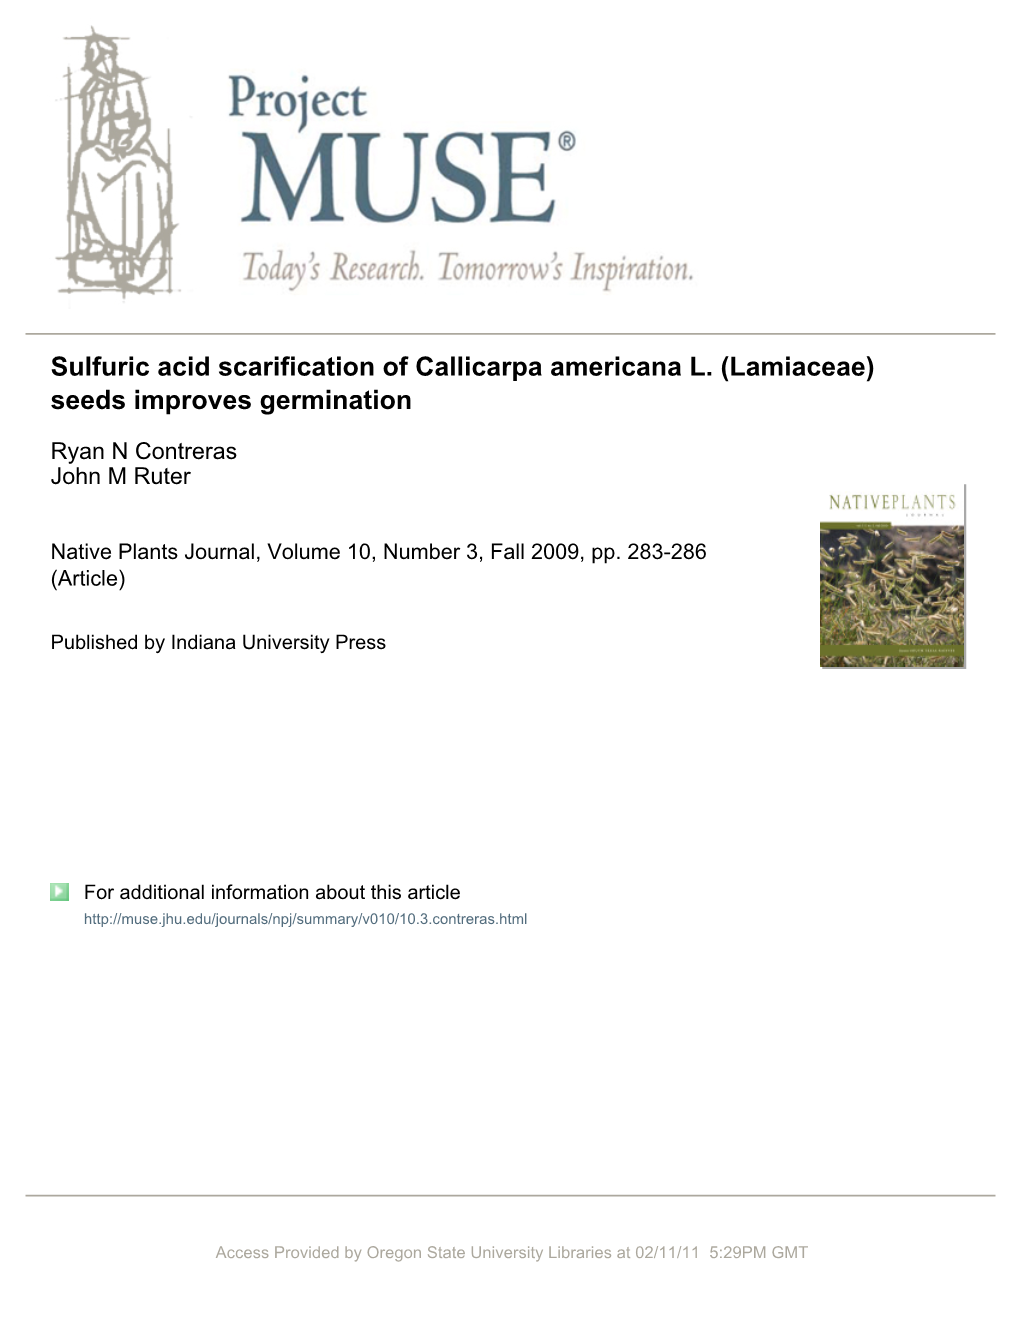 Sulfuric Acid Scarification of Callicarpa Americana L. (Lamiaceae) Seeds Improves Germination